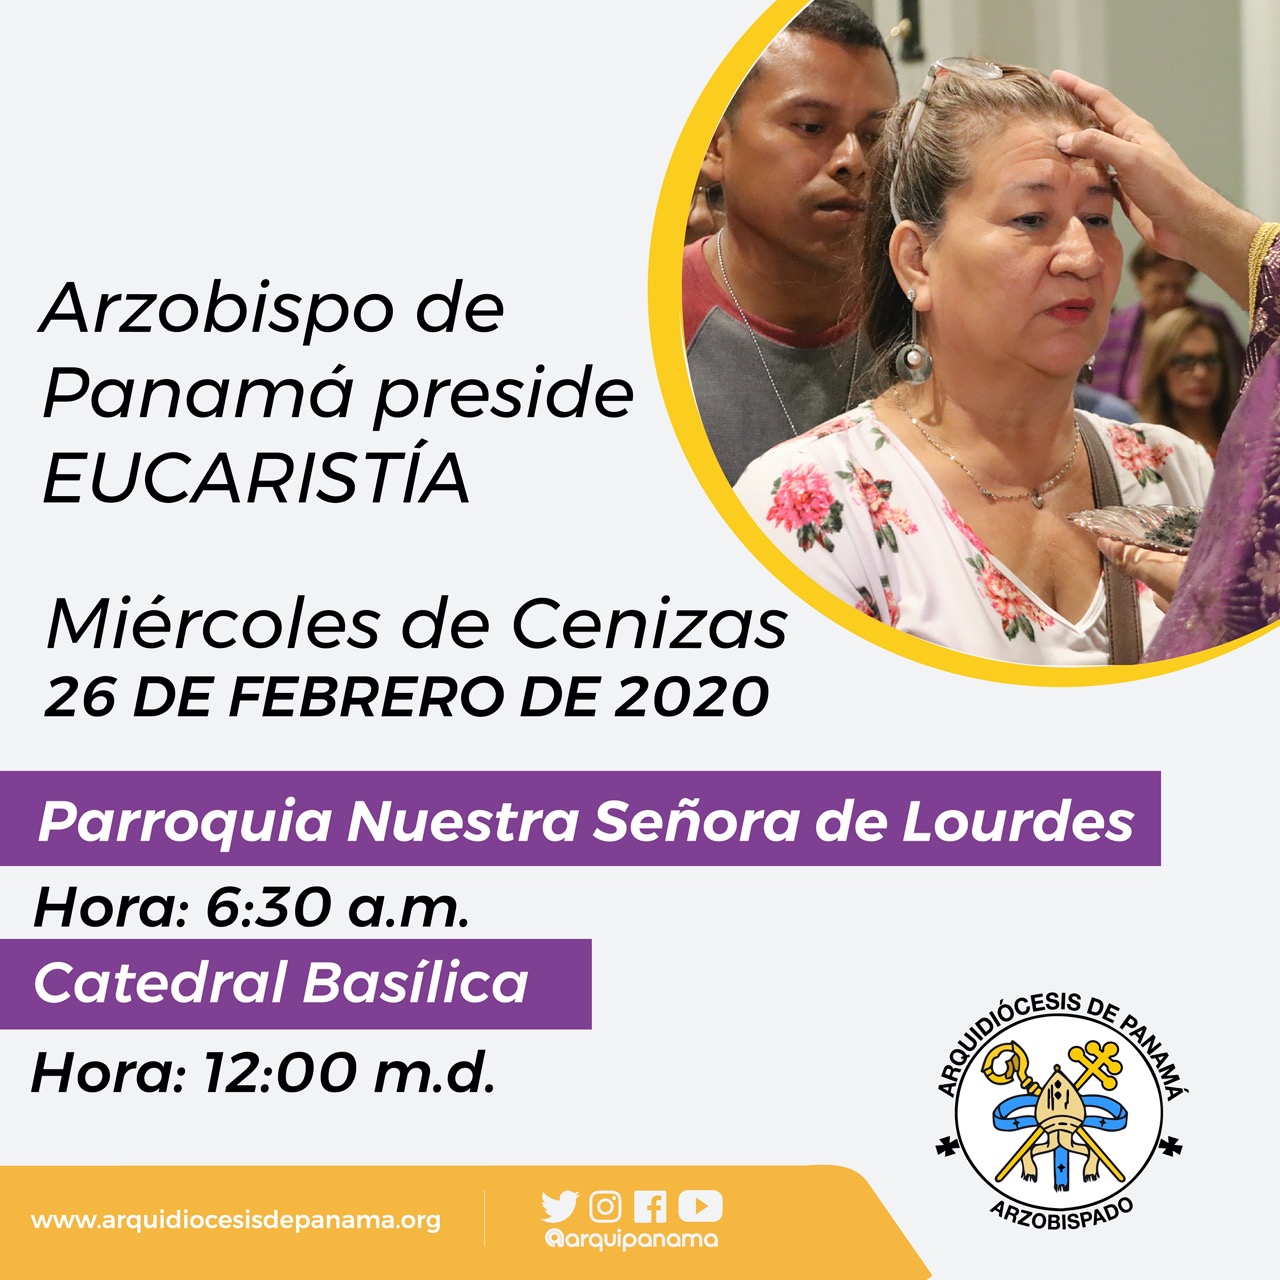 Eucaristía "Miércoles de Cenizas" - Arzobispo de Panamá